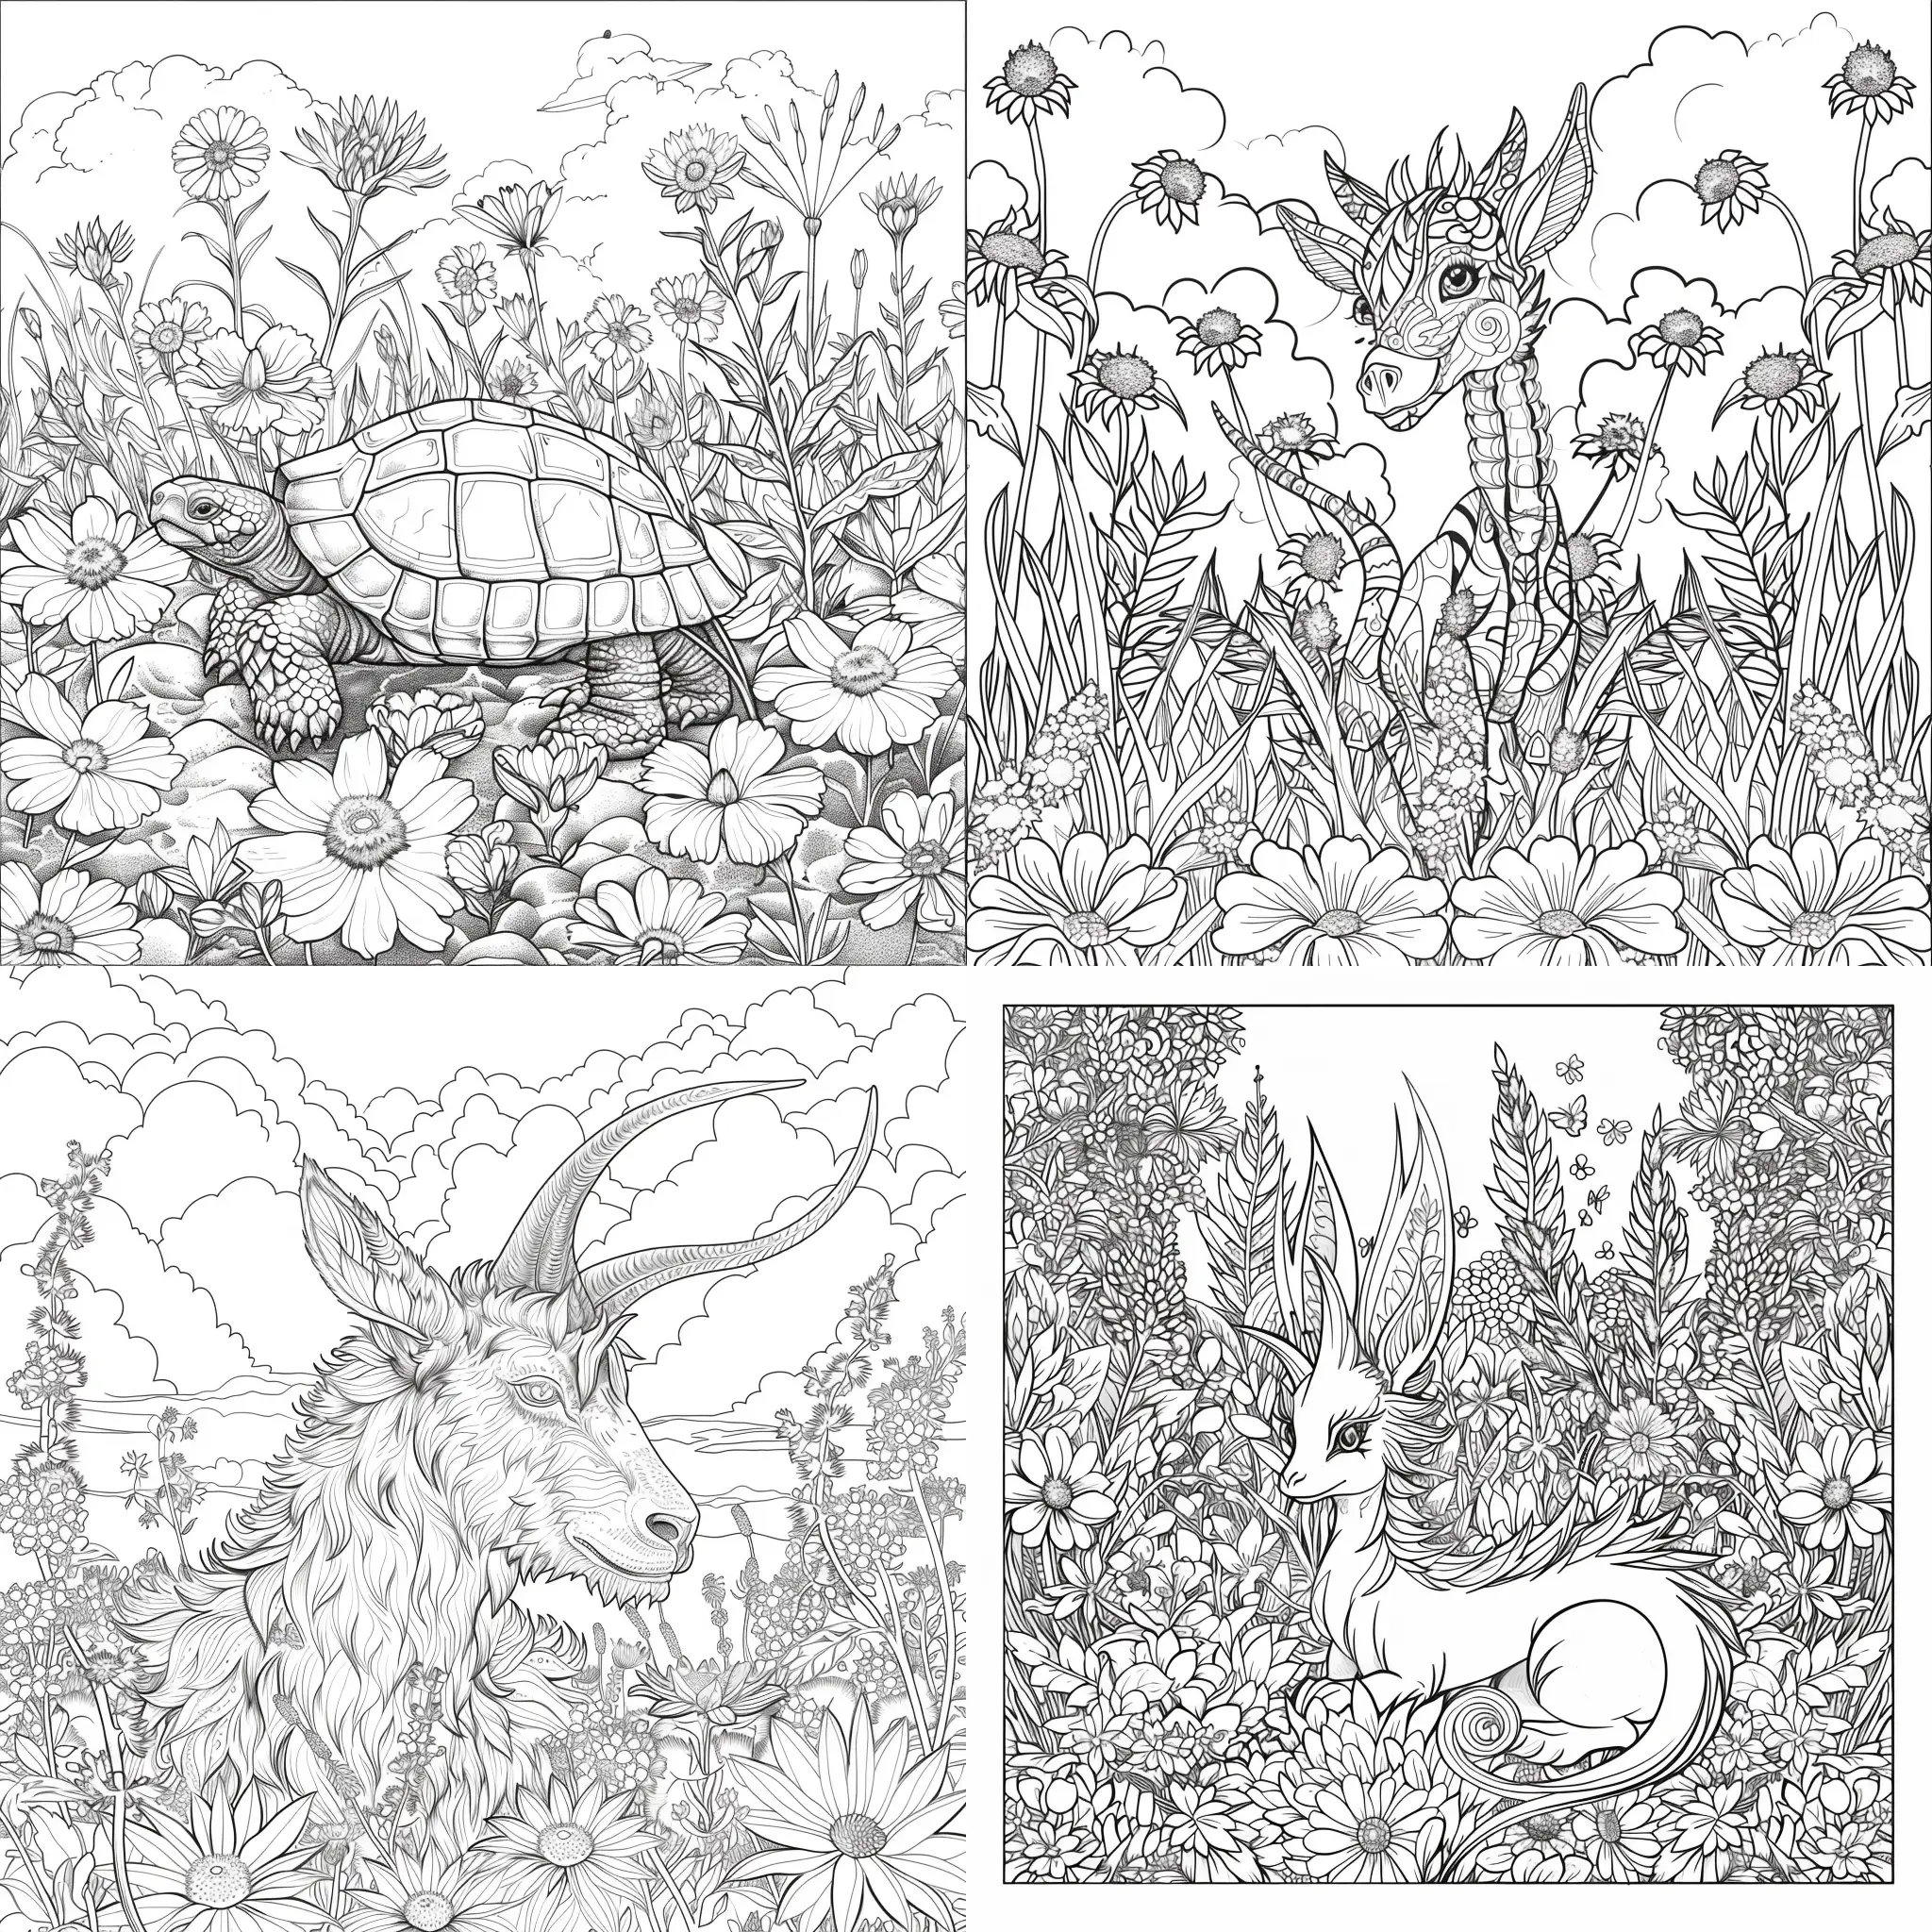 Leprechaun-Amidst-Vibrant-Flower-Field-Coloring-Page